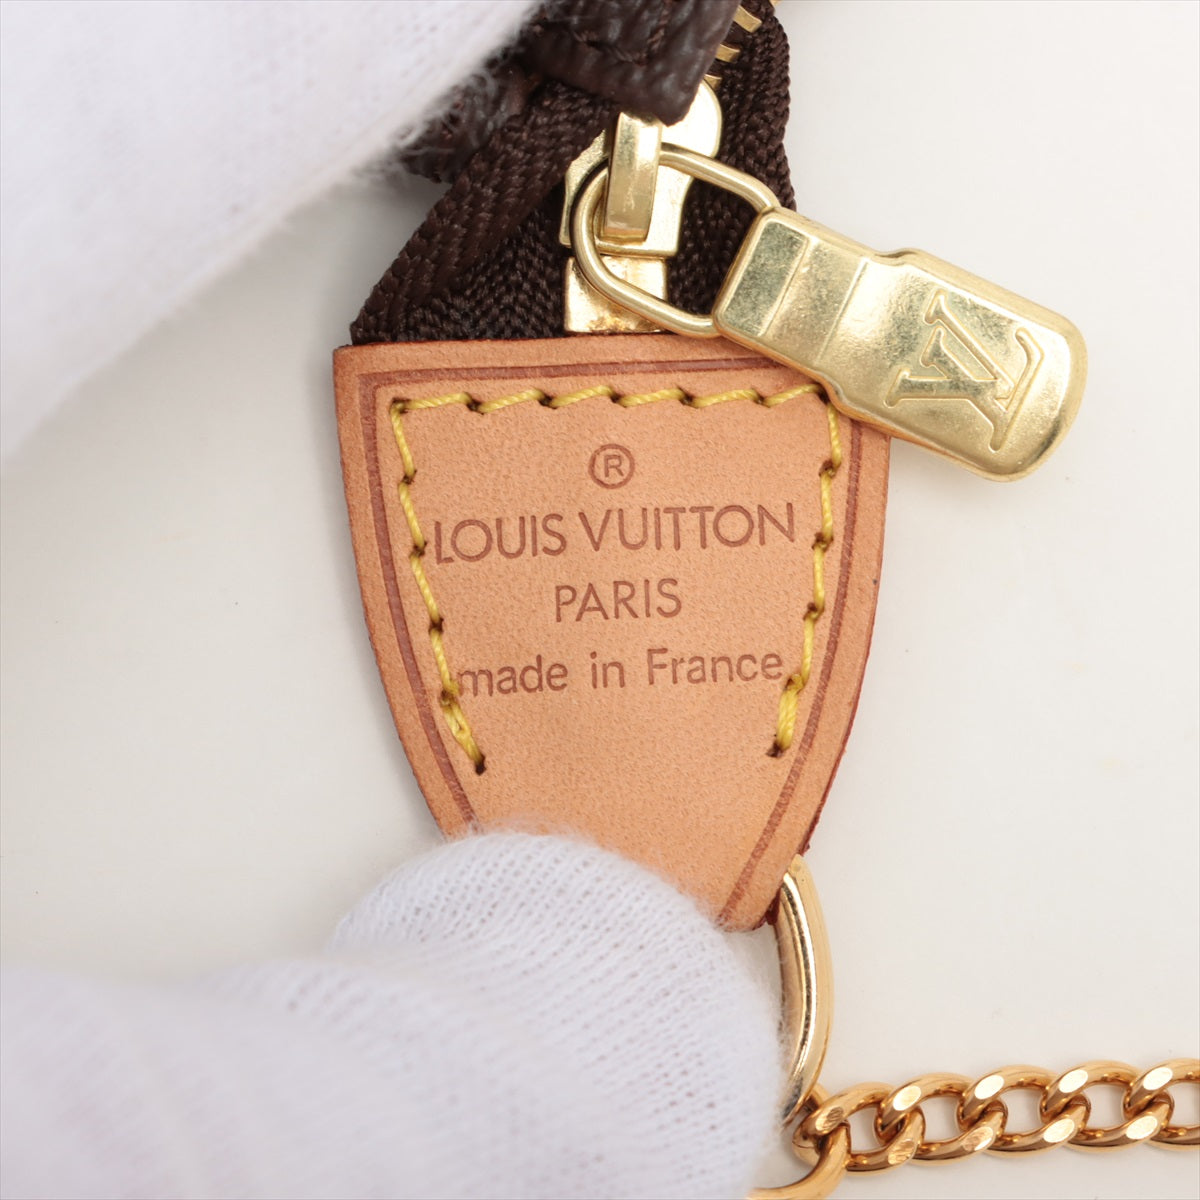 Louis Vuitton Mini Pochette Monogram Christmas 2019 - THE PURSE AFFAIR